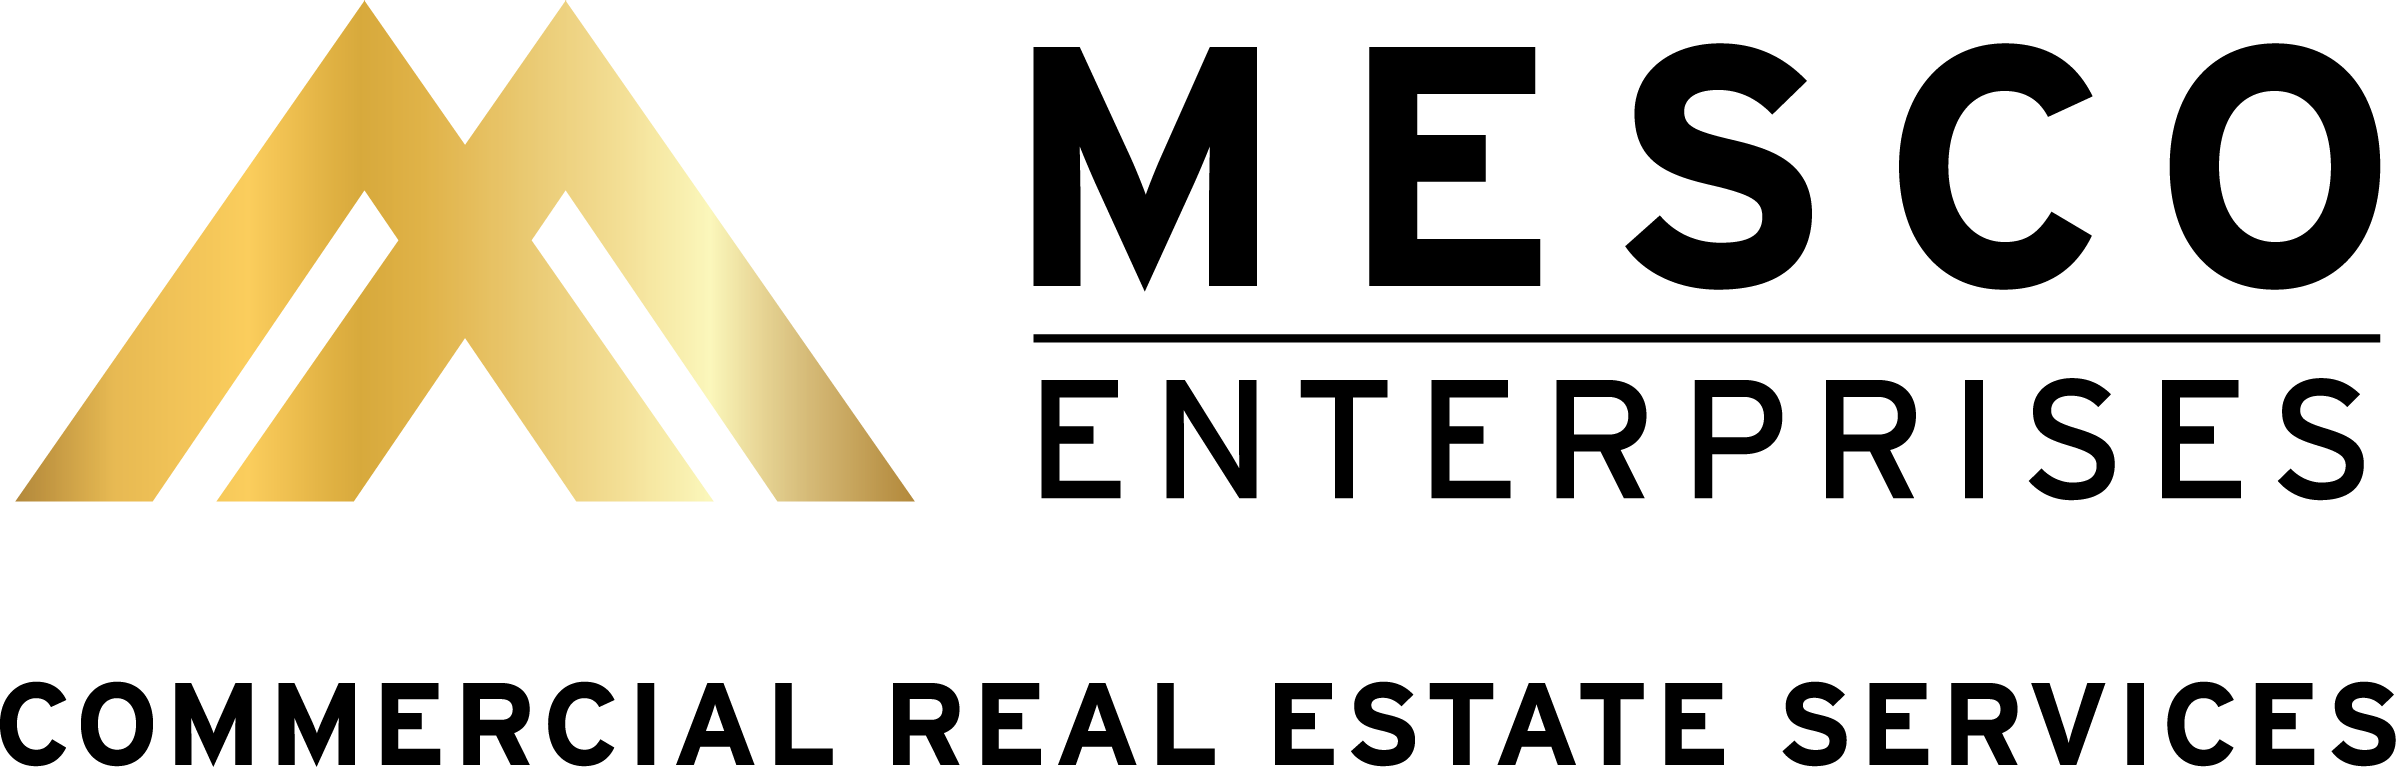 Logo Design for Mesco Enterprises